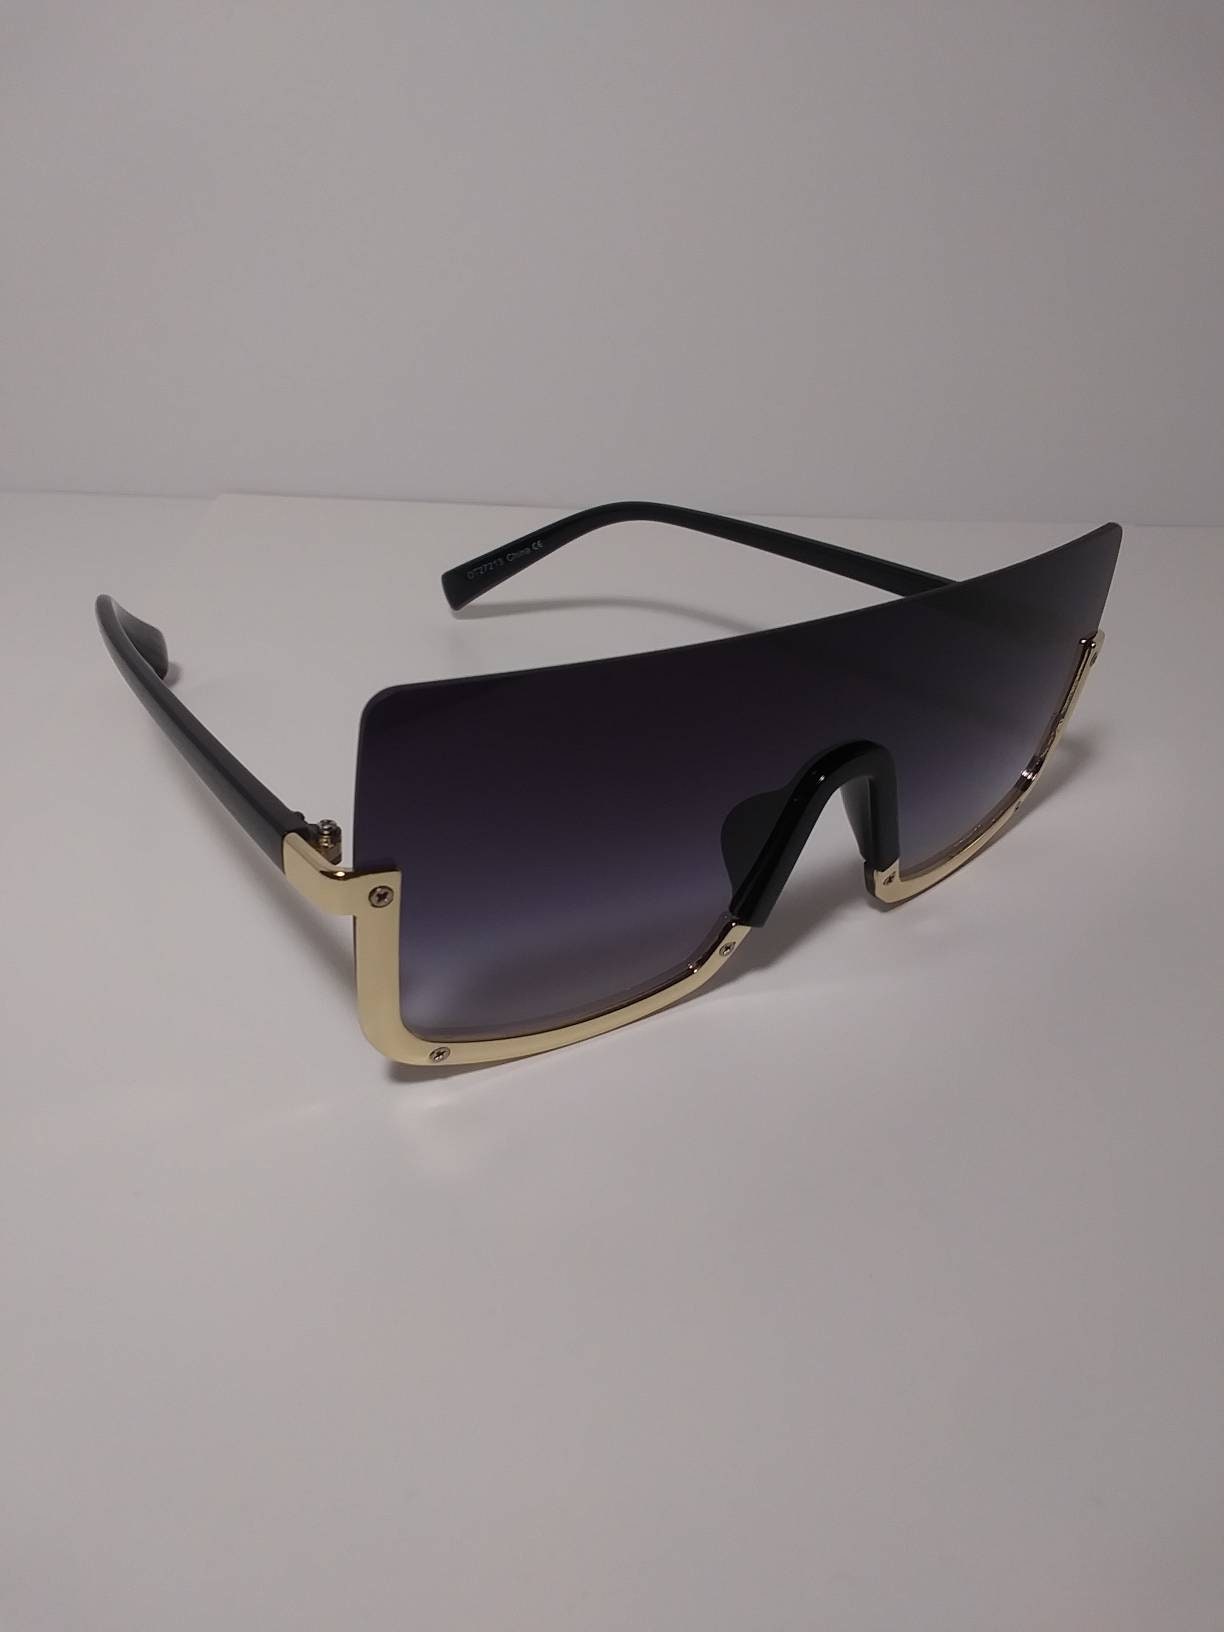 Black Shield With Gold Frame Hot Style Retro Fashion Eyewear. 